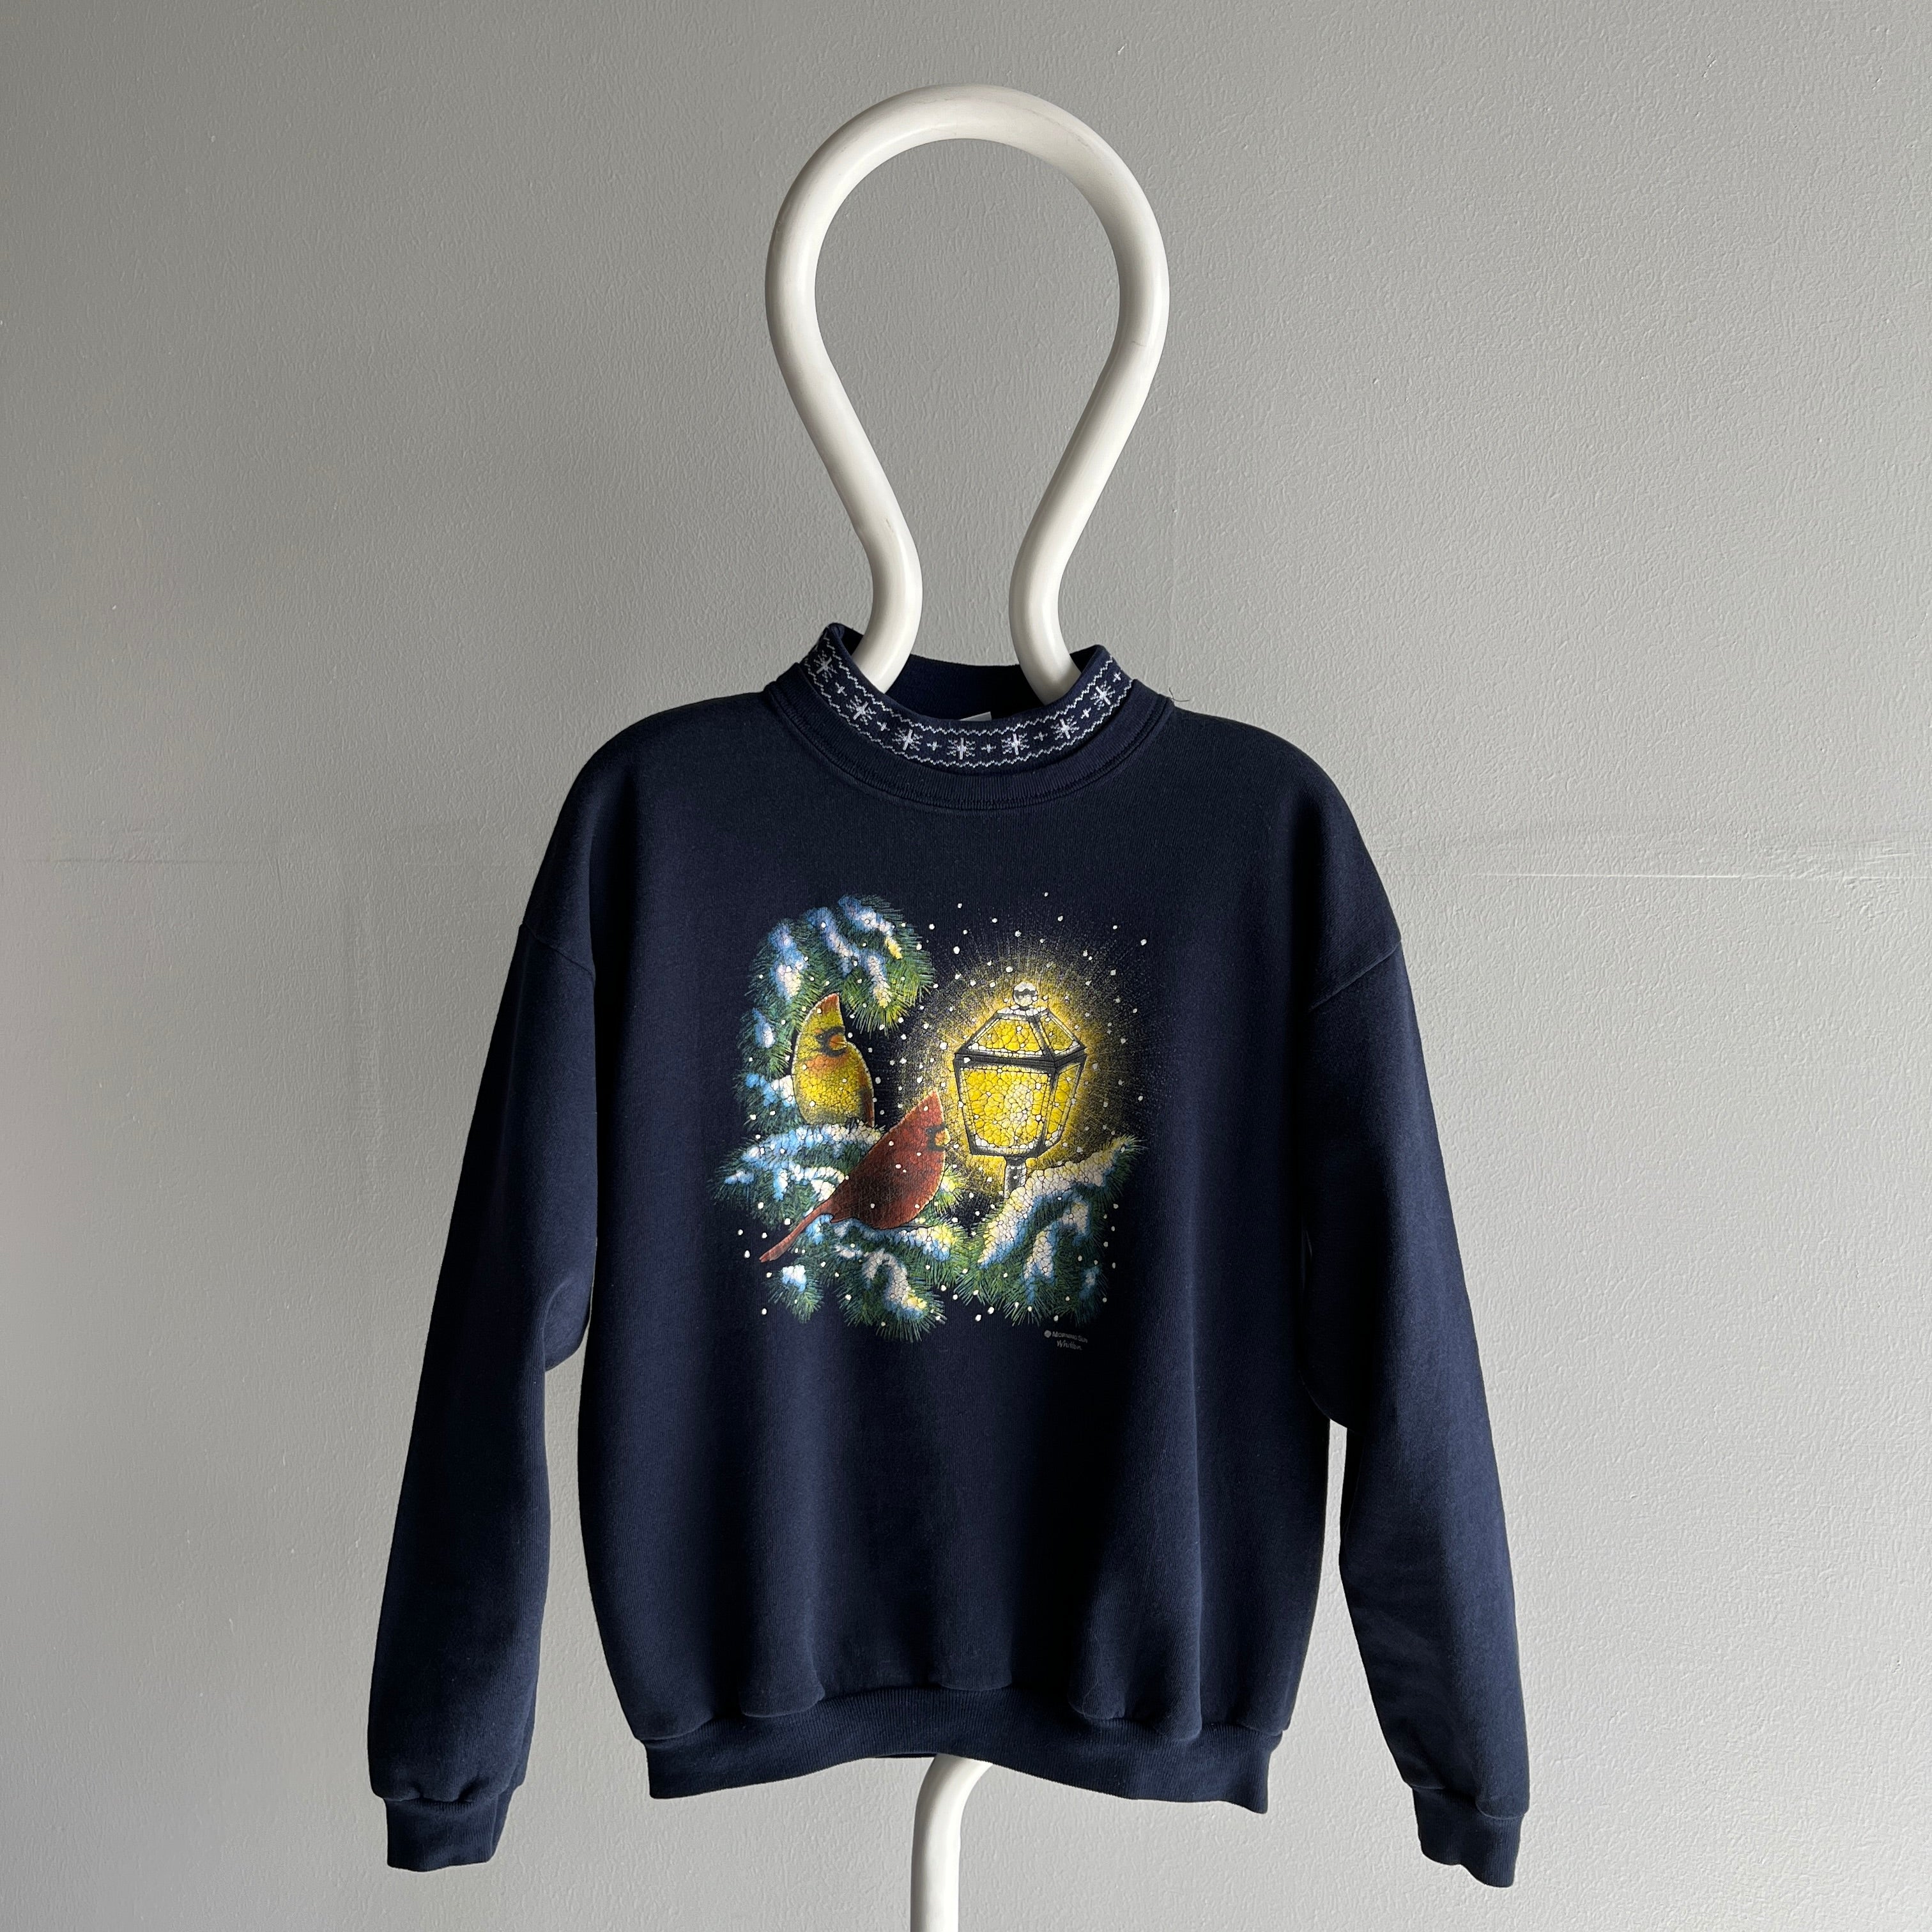 1980s Birds and a Lamp in Winter Sweatshirt